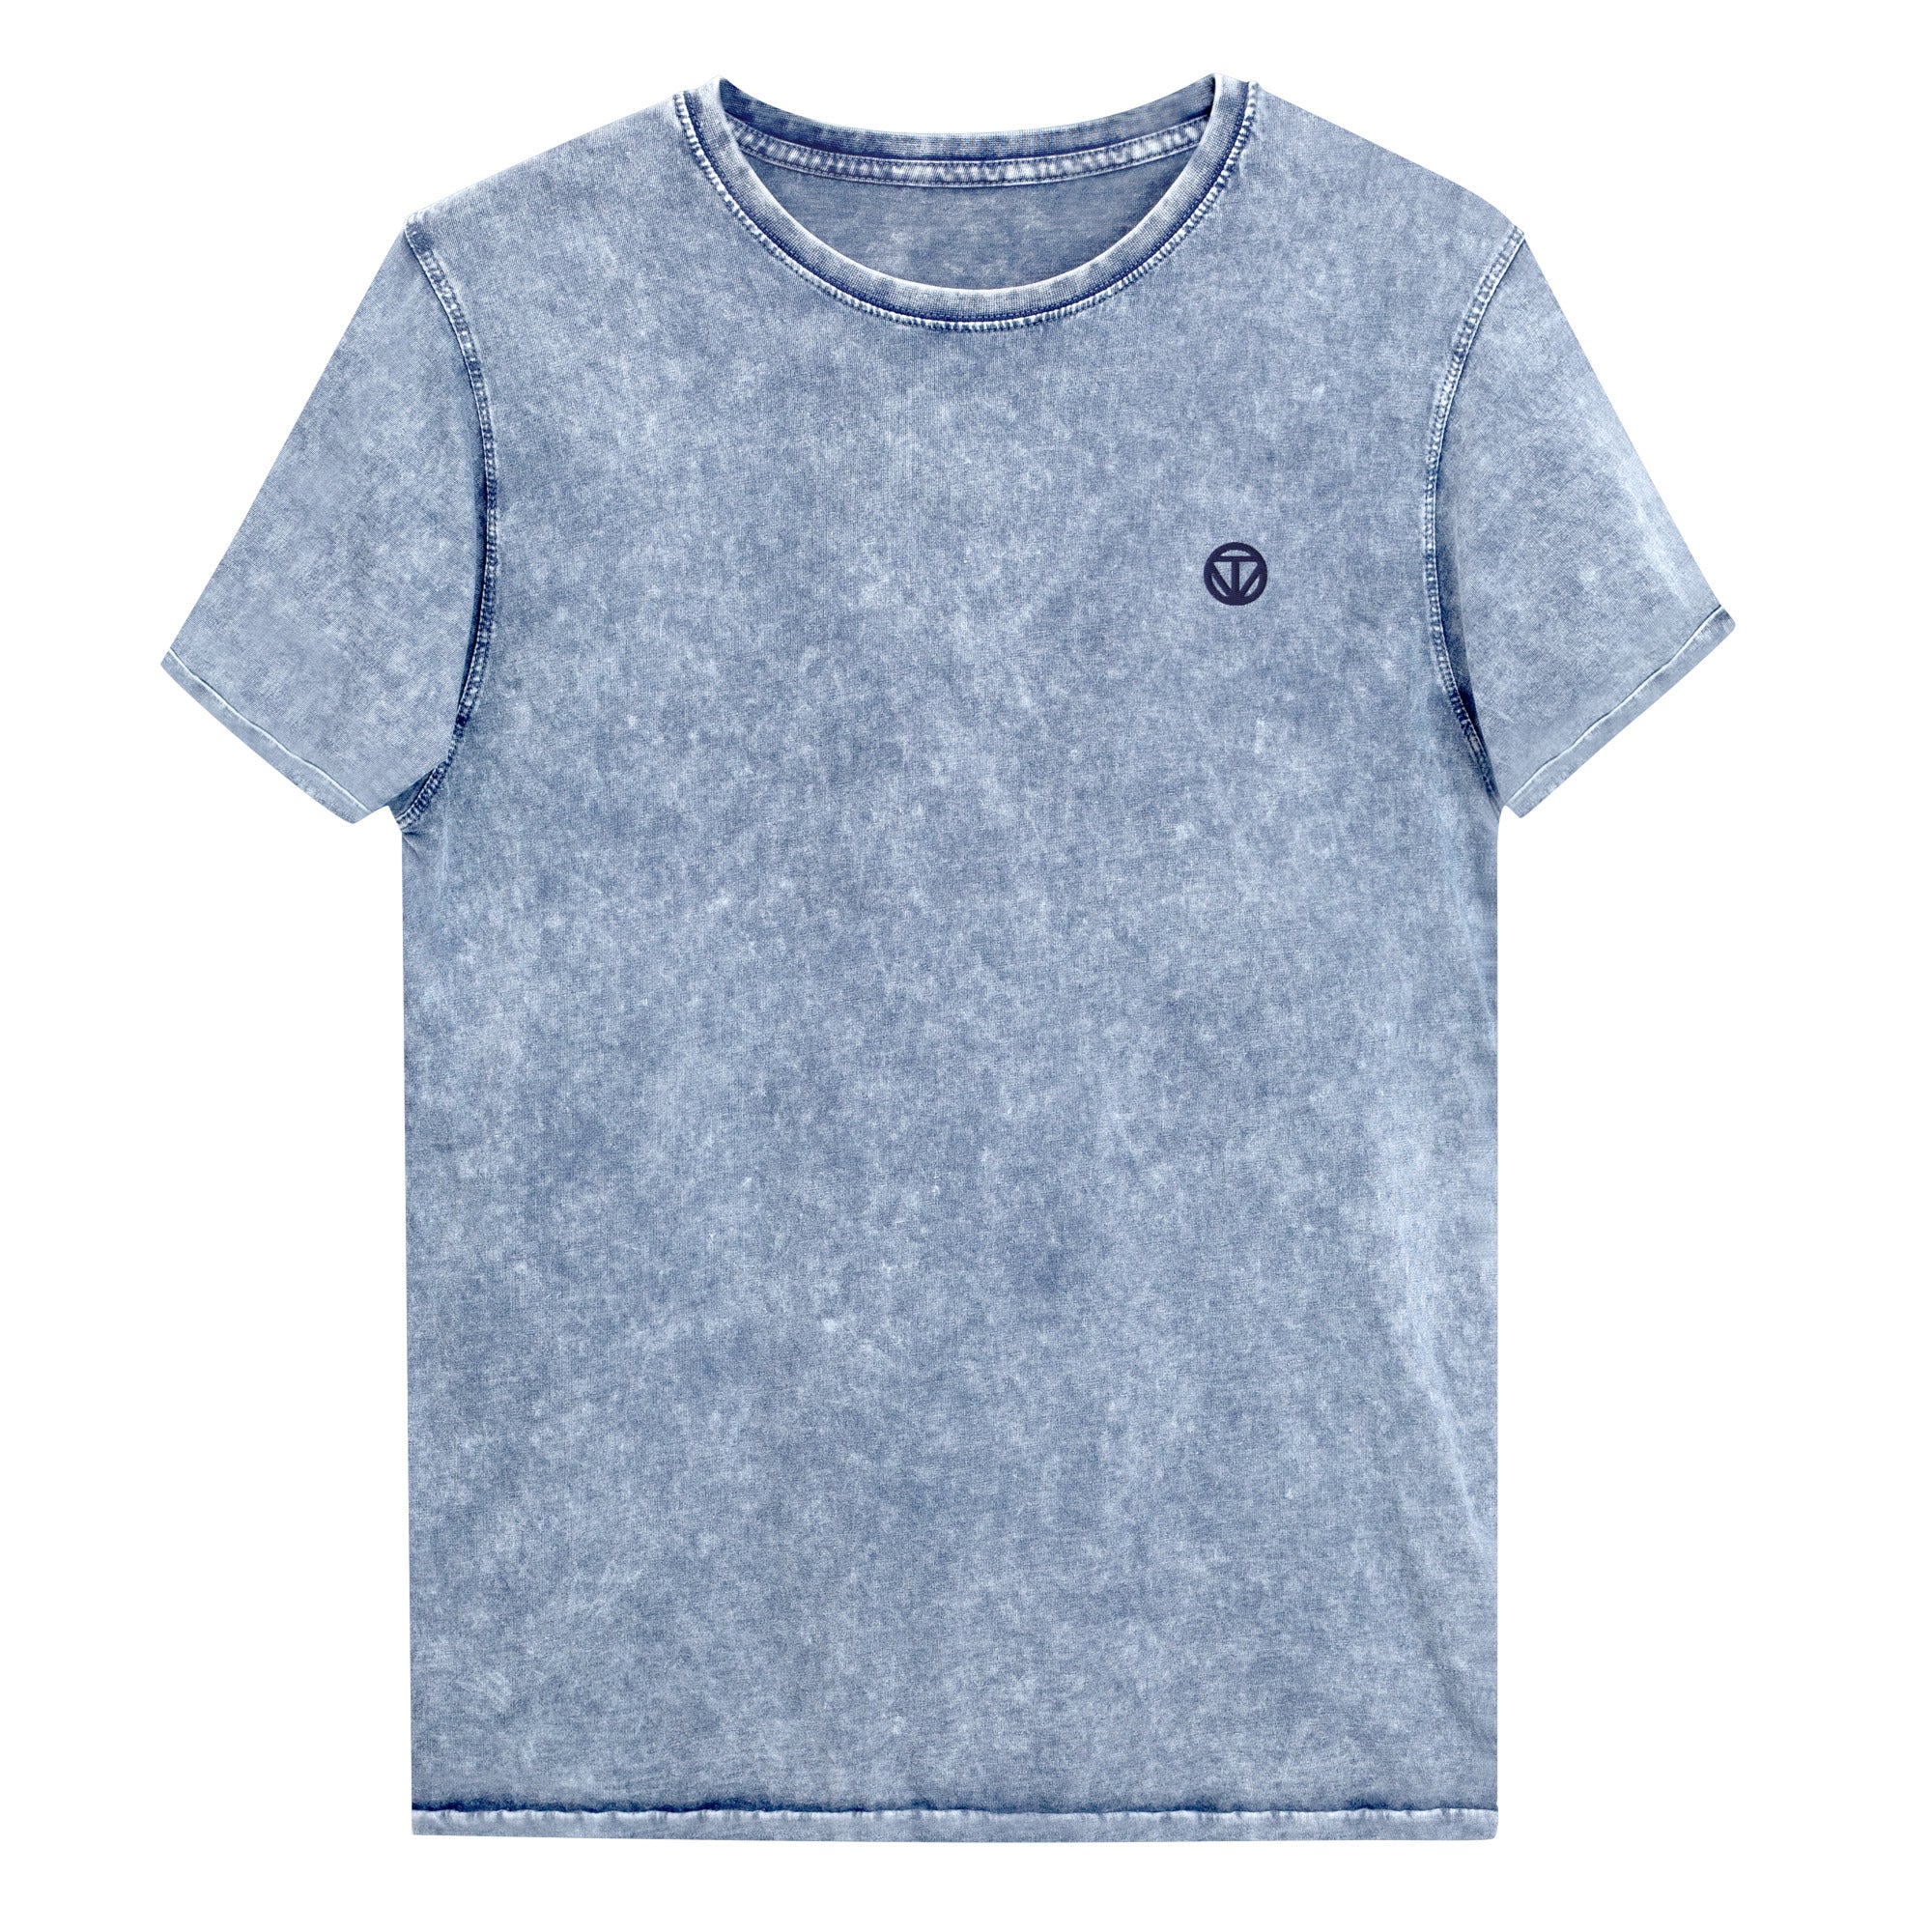 TIME OF VIBES Herren Baumwoll T-Shirt meliert 23 (Blau) - €31,00